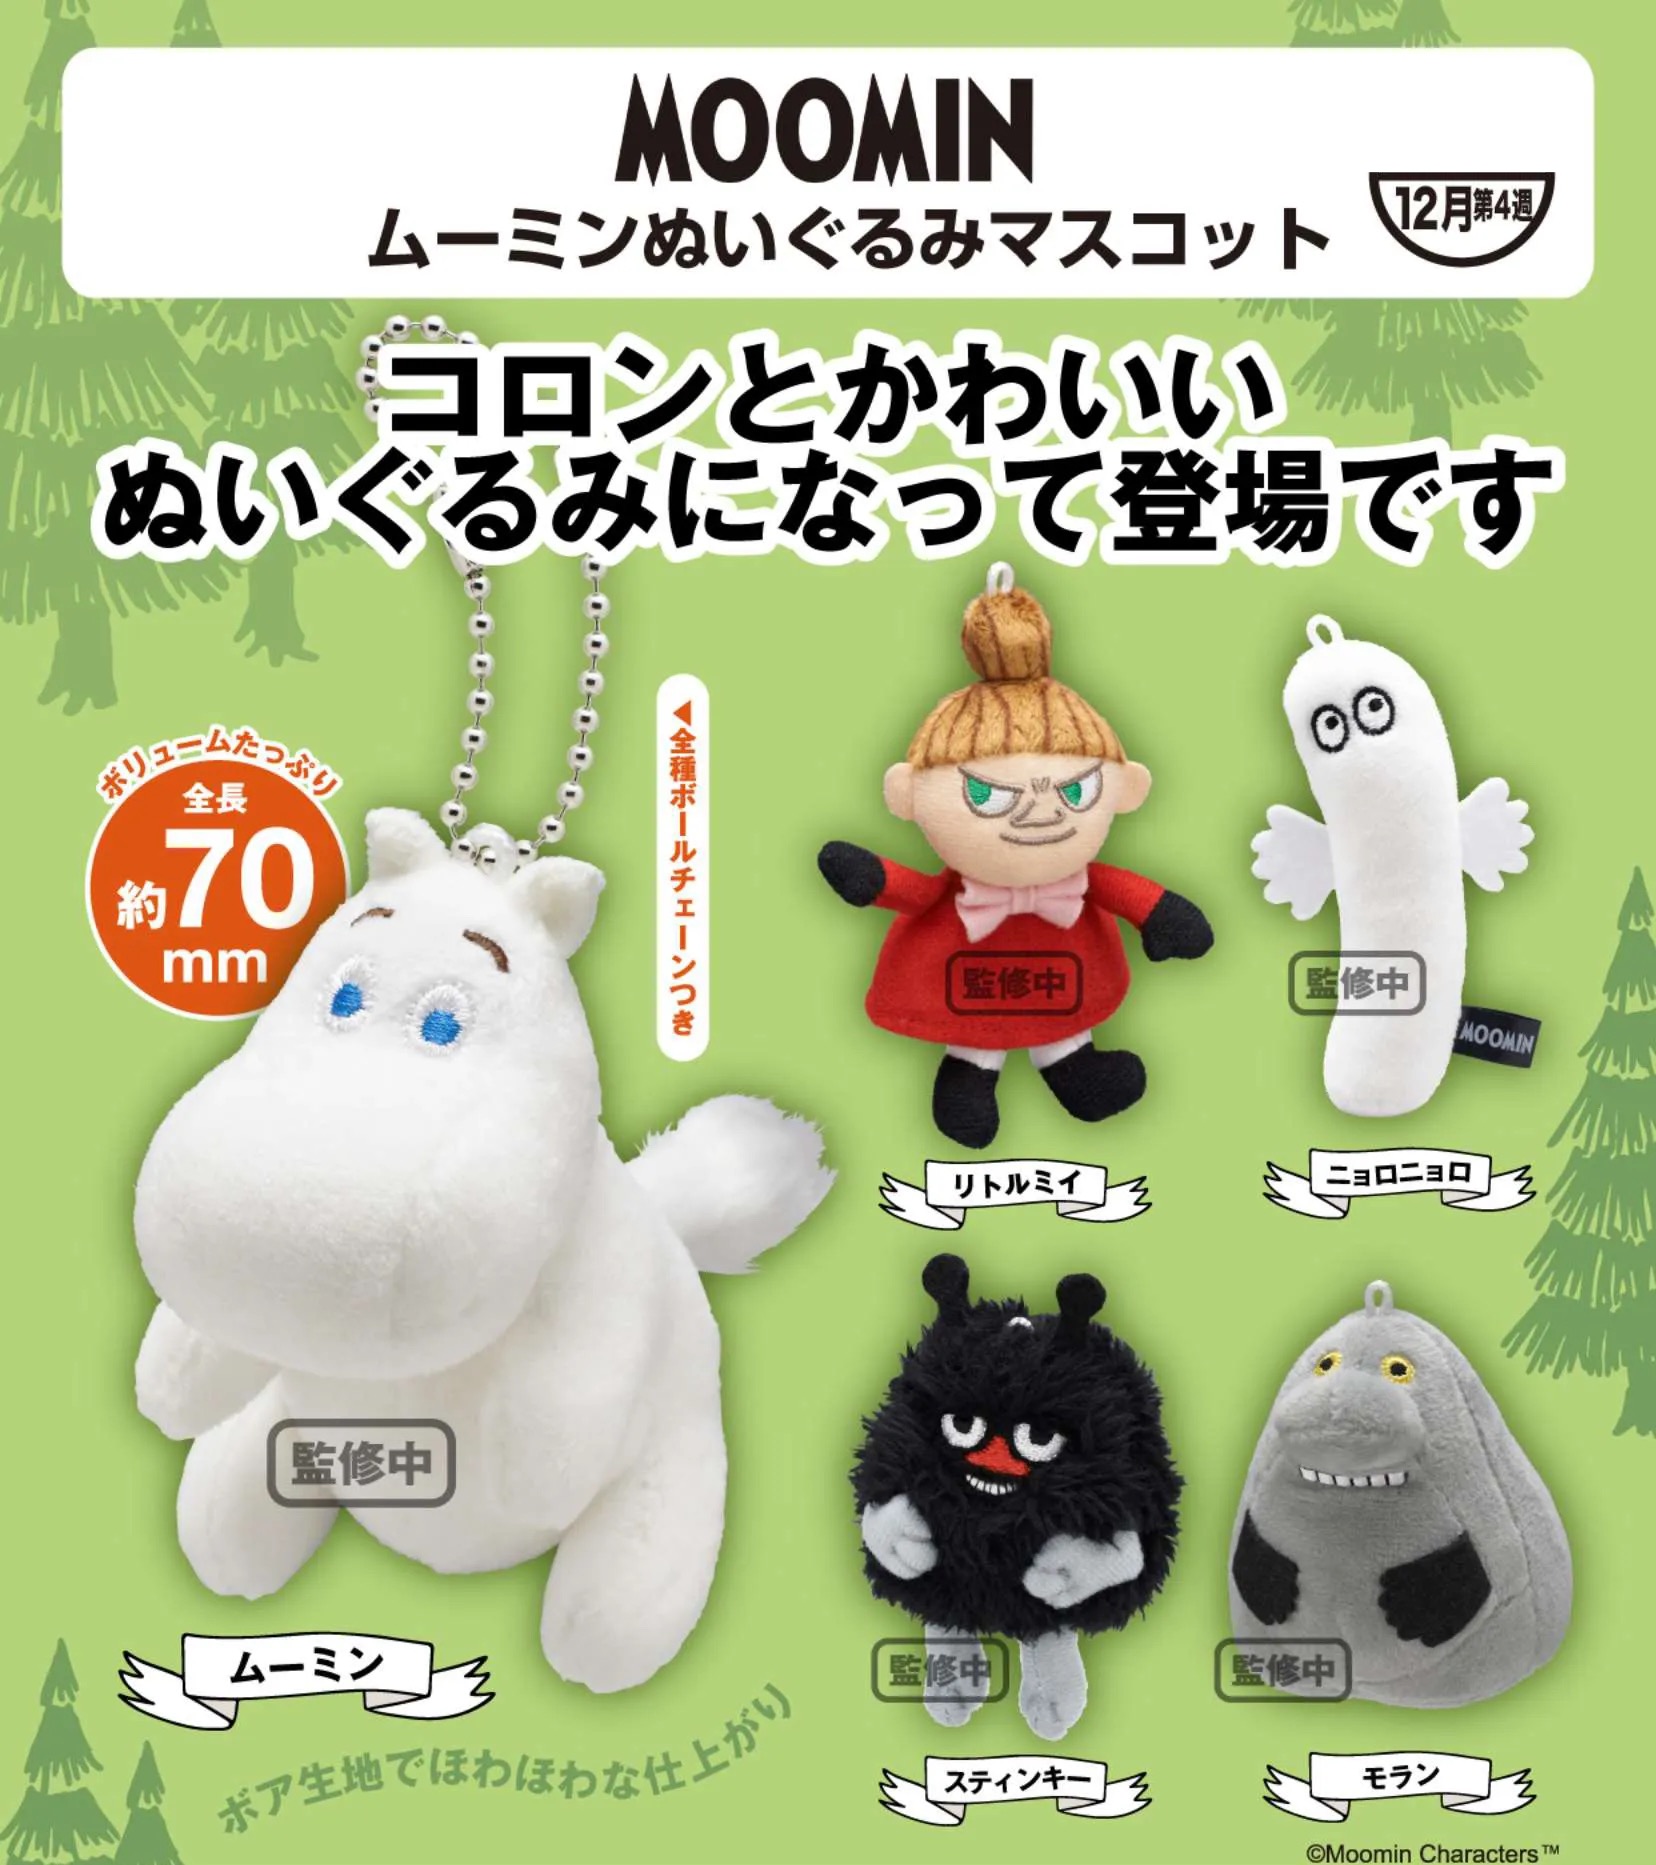 [In stock] "Moomin" Plush Mascot